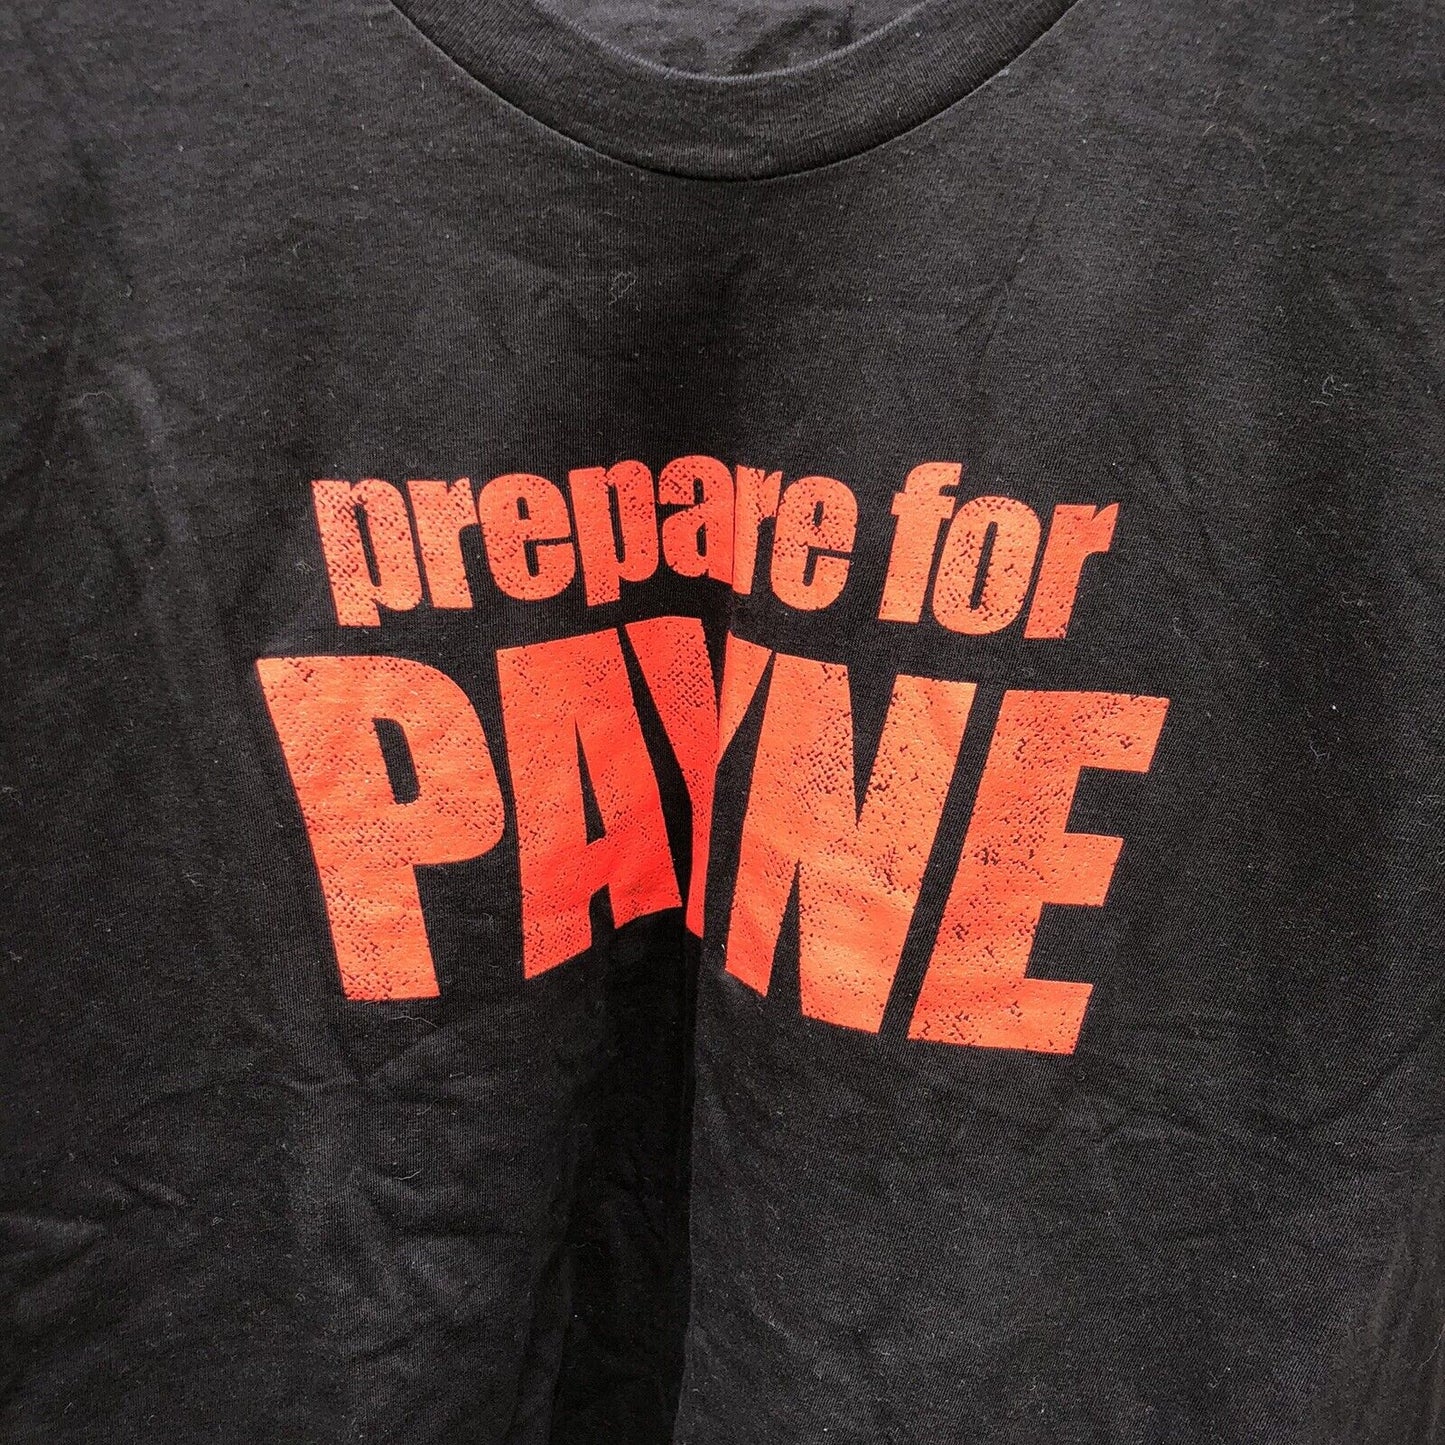 Max Payne Movie 10.17.08 Pre-Release Promo T-Shirt XL "Prepare for Payne" Size X